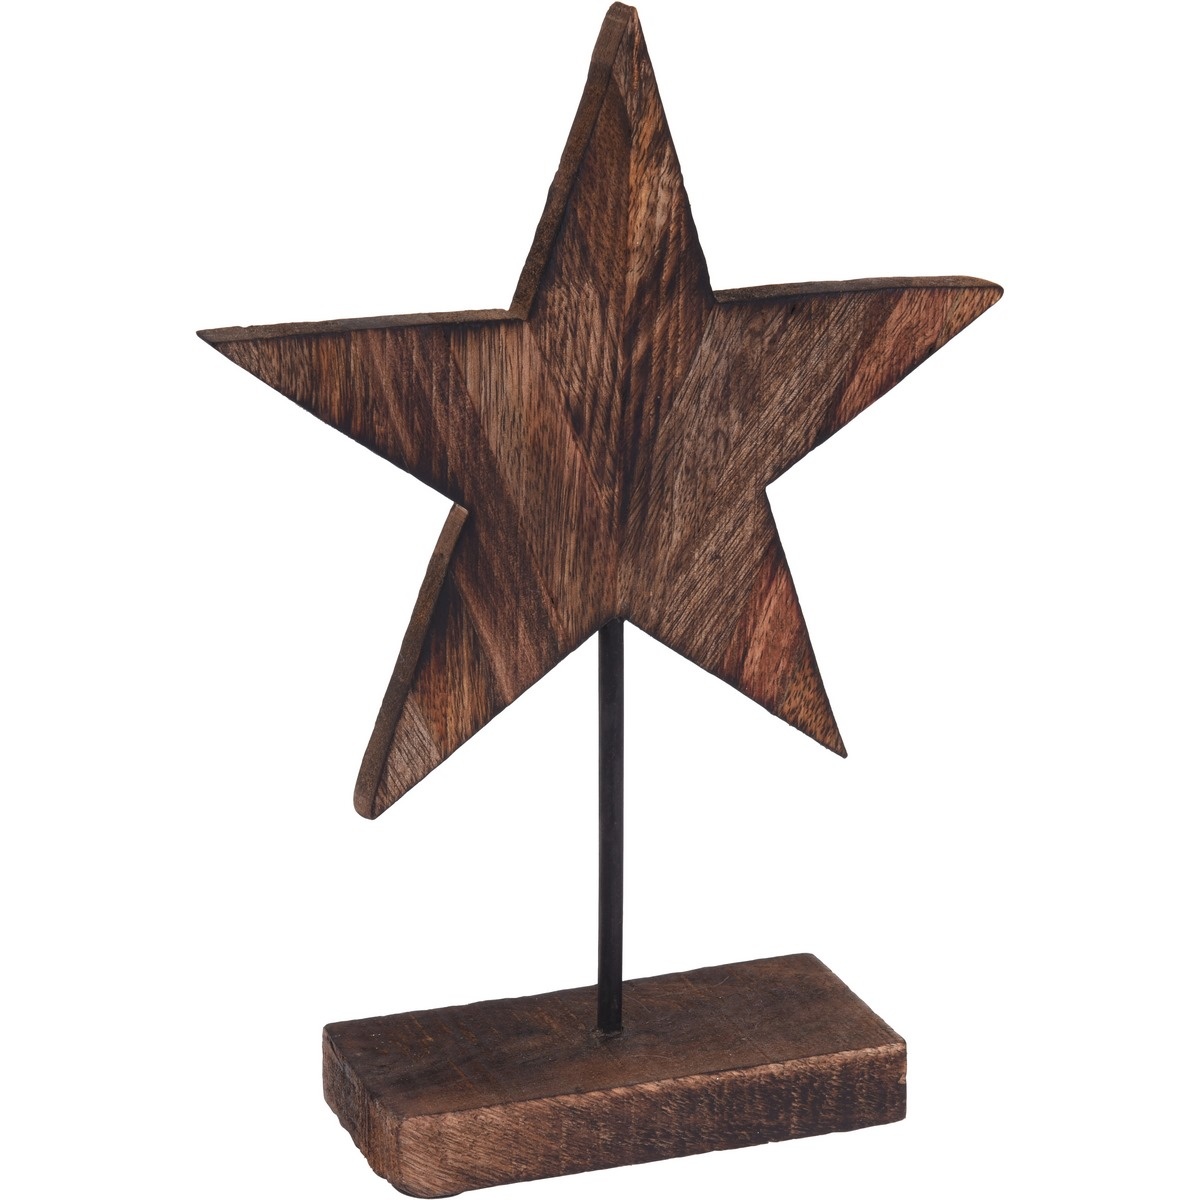 Drevená dekorácia Wooden Star, 26 cm